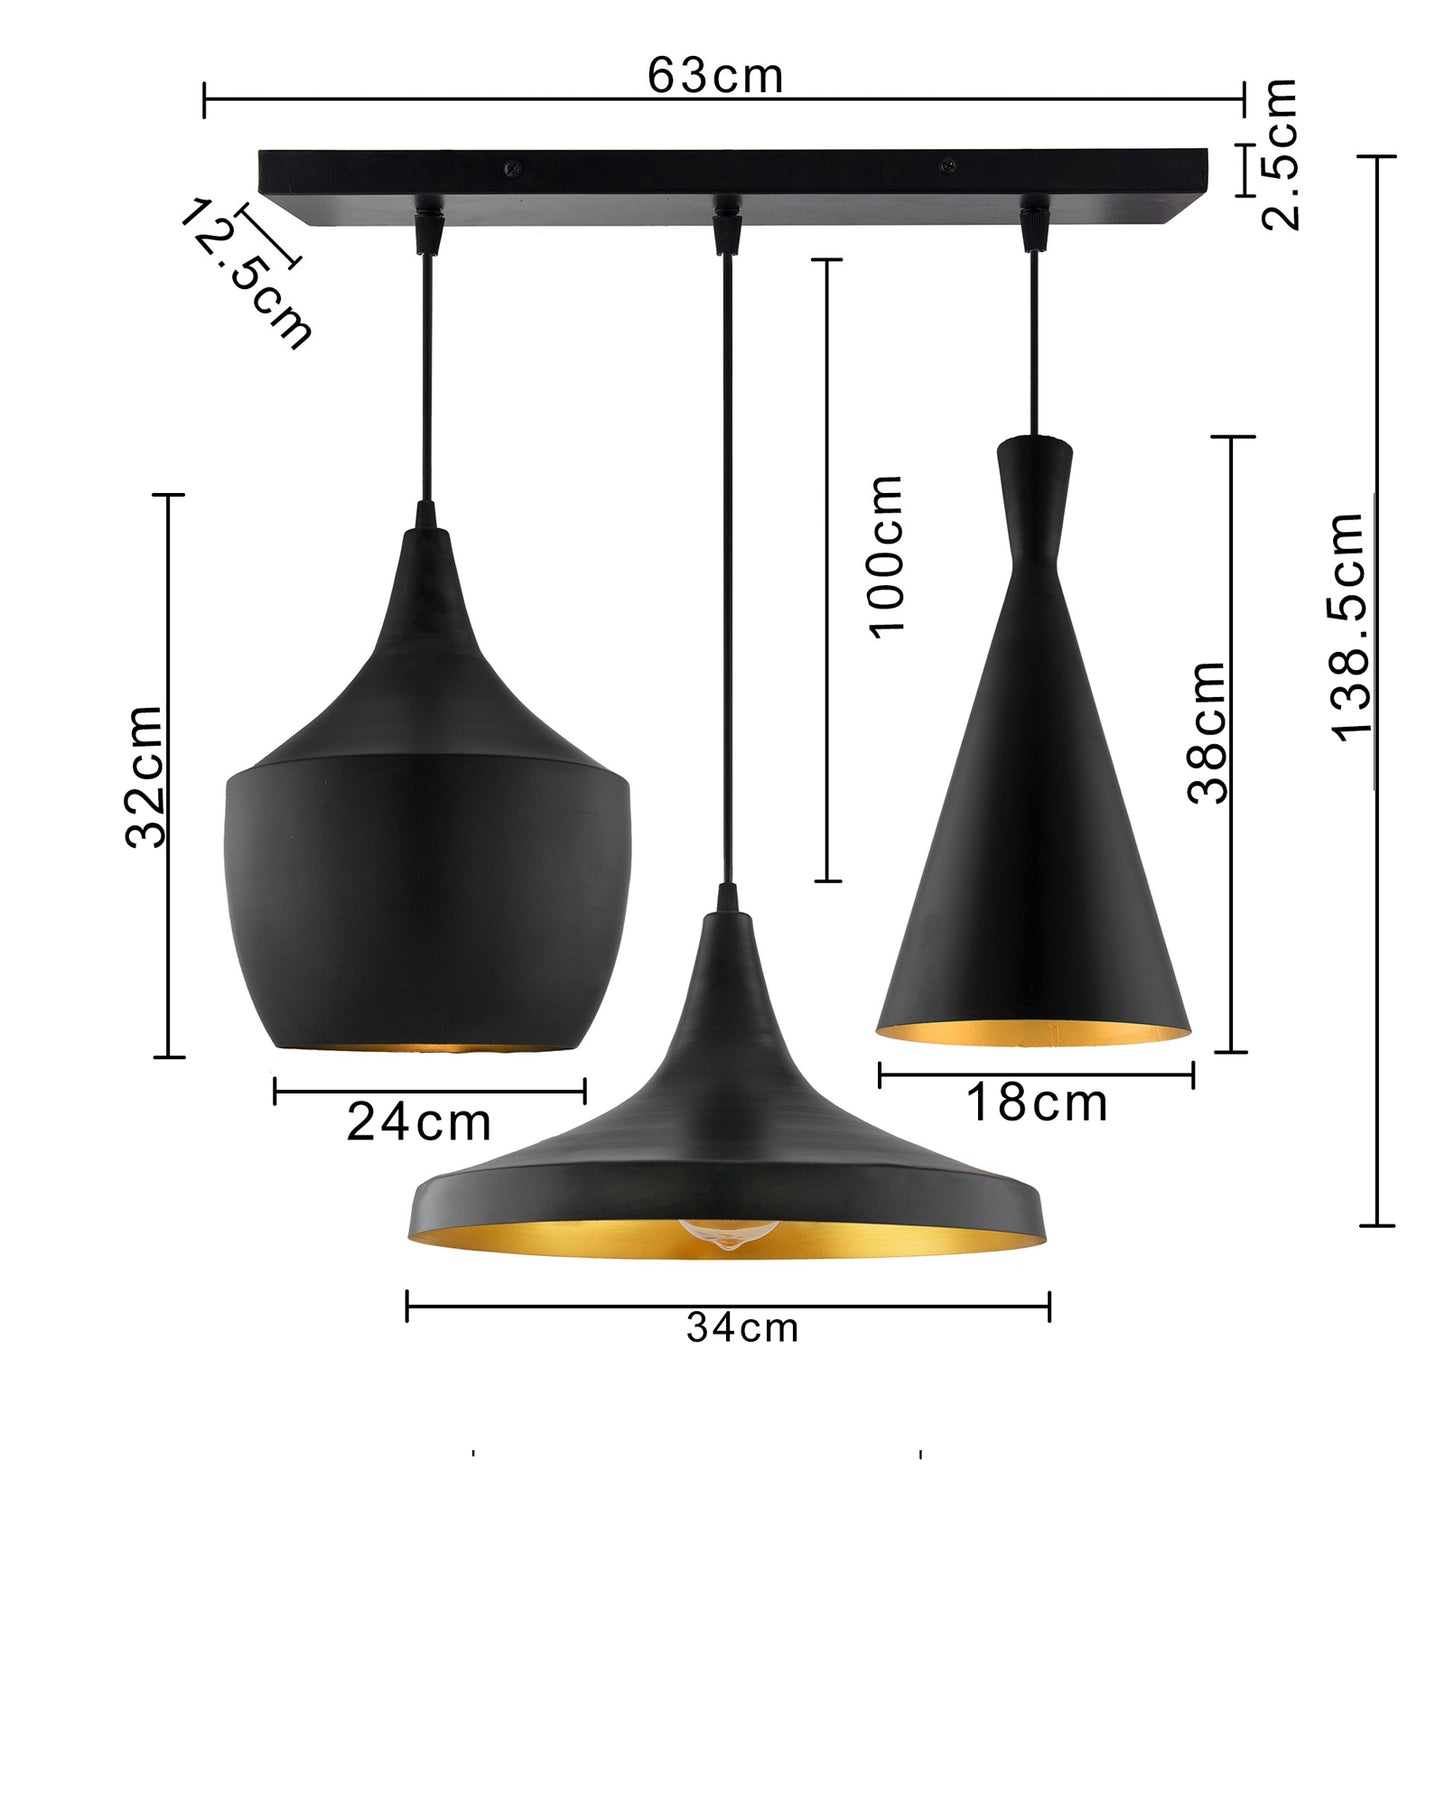 3-Lights Linear Cluster Chandelier Modern Tri-Nordic hanging Light, E27 Holder, Decorative, URBAN Retro, Nordic Style